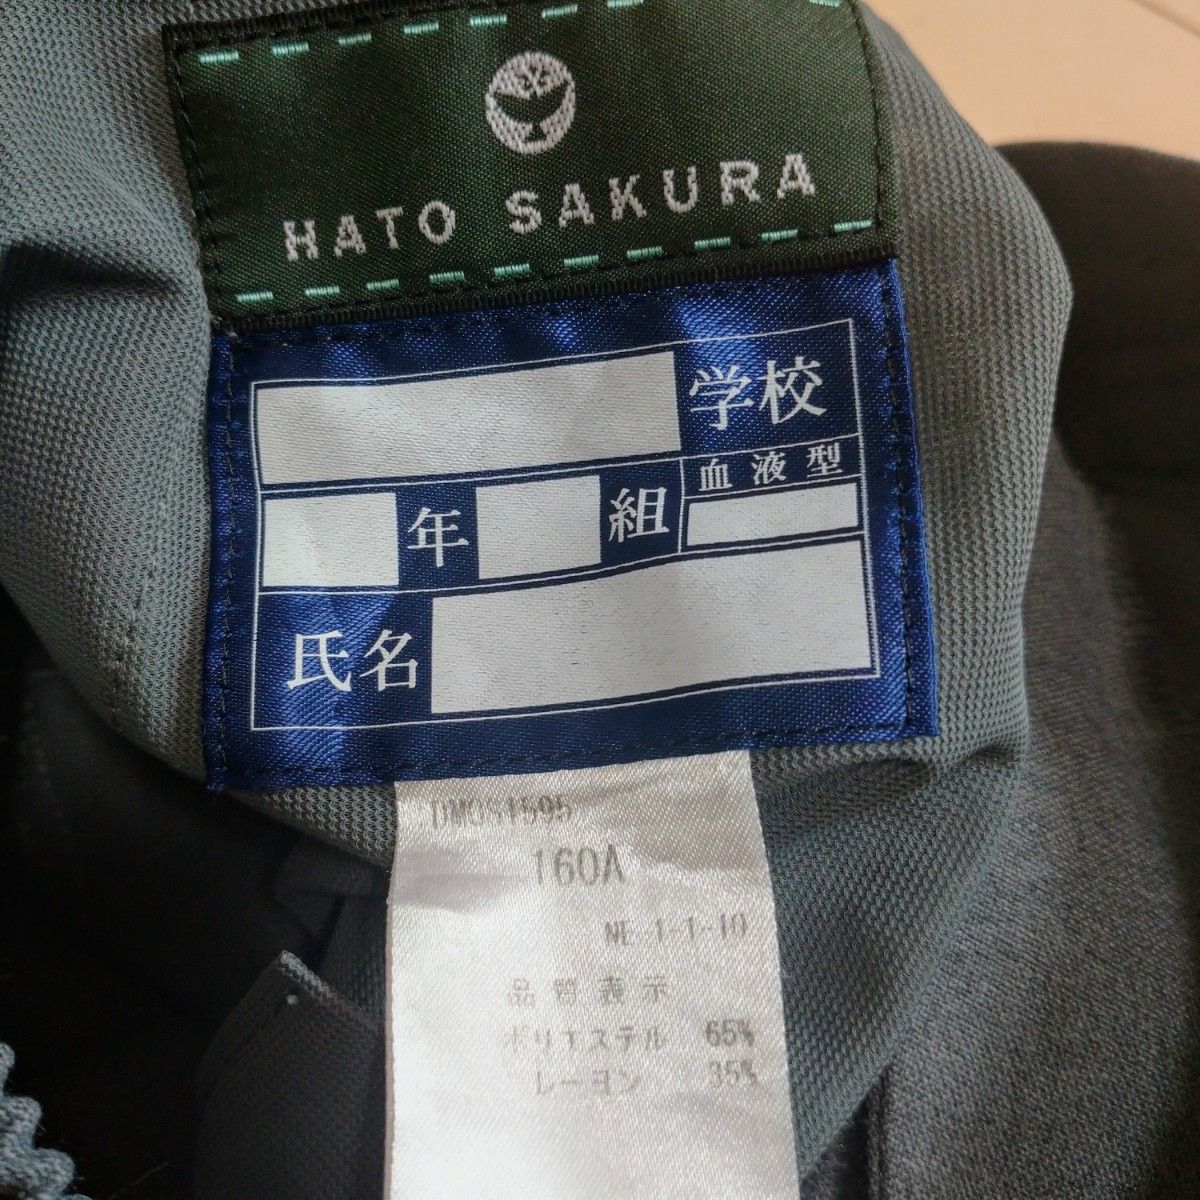 HATO  SAKURA 鳩桜  ショートパンツ 小学生 制服